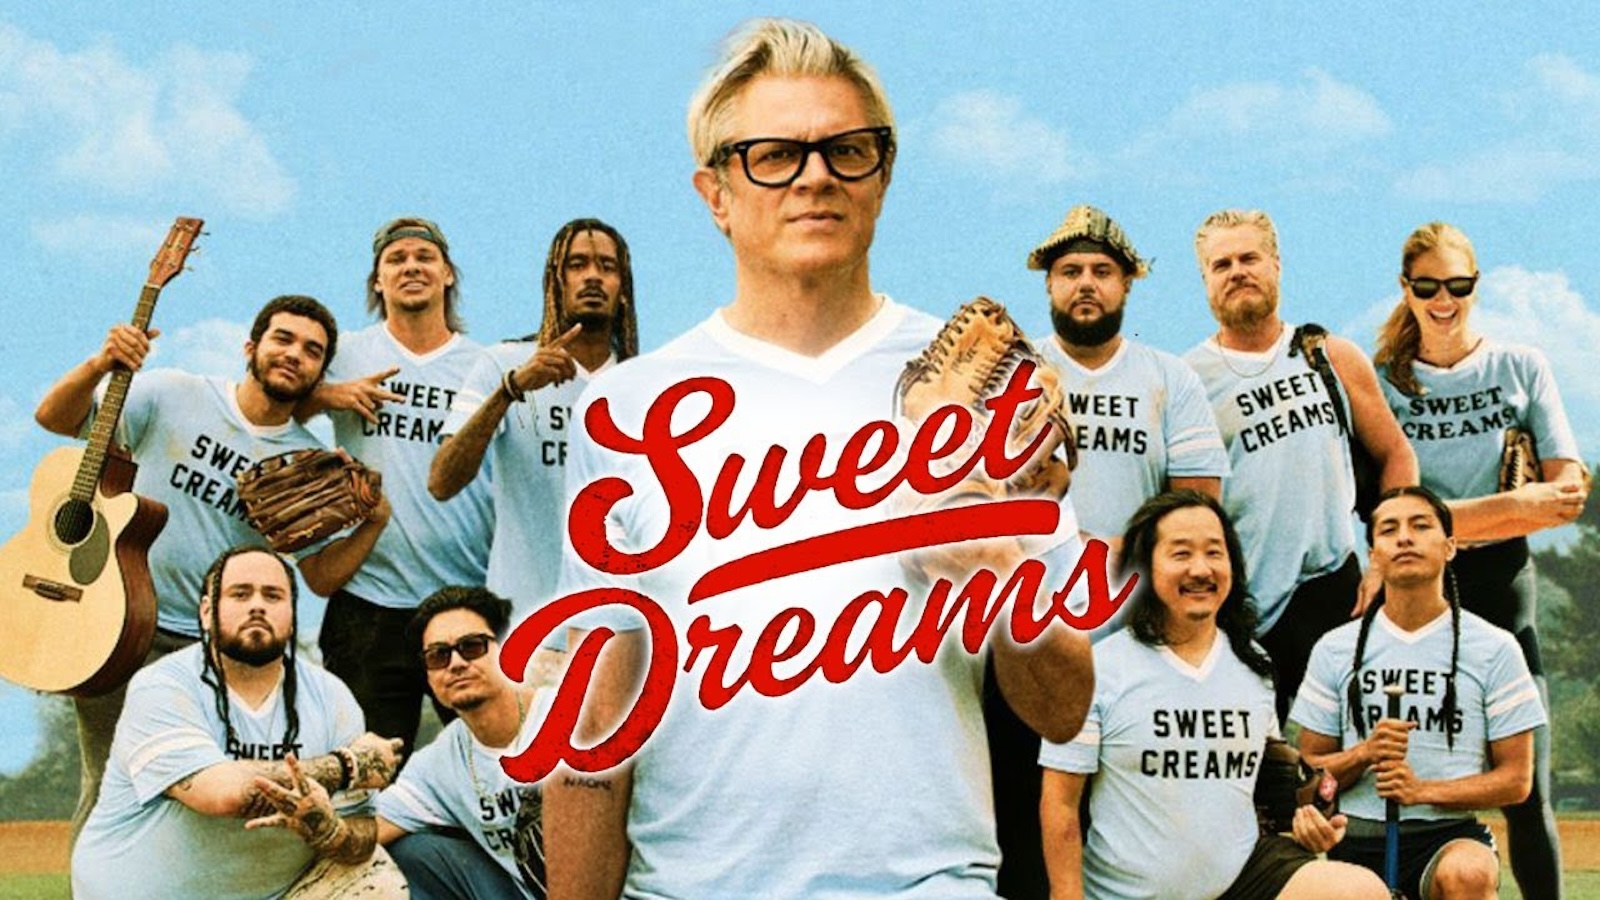 Sweet Dreams: Johnny Knoxville (Jackass) affronta la vita in rehab nel trailer